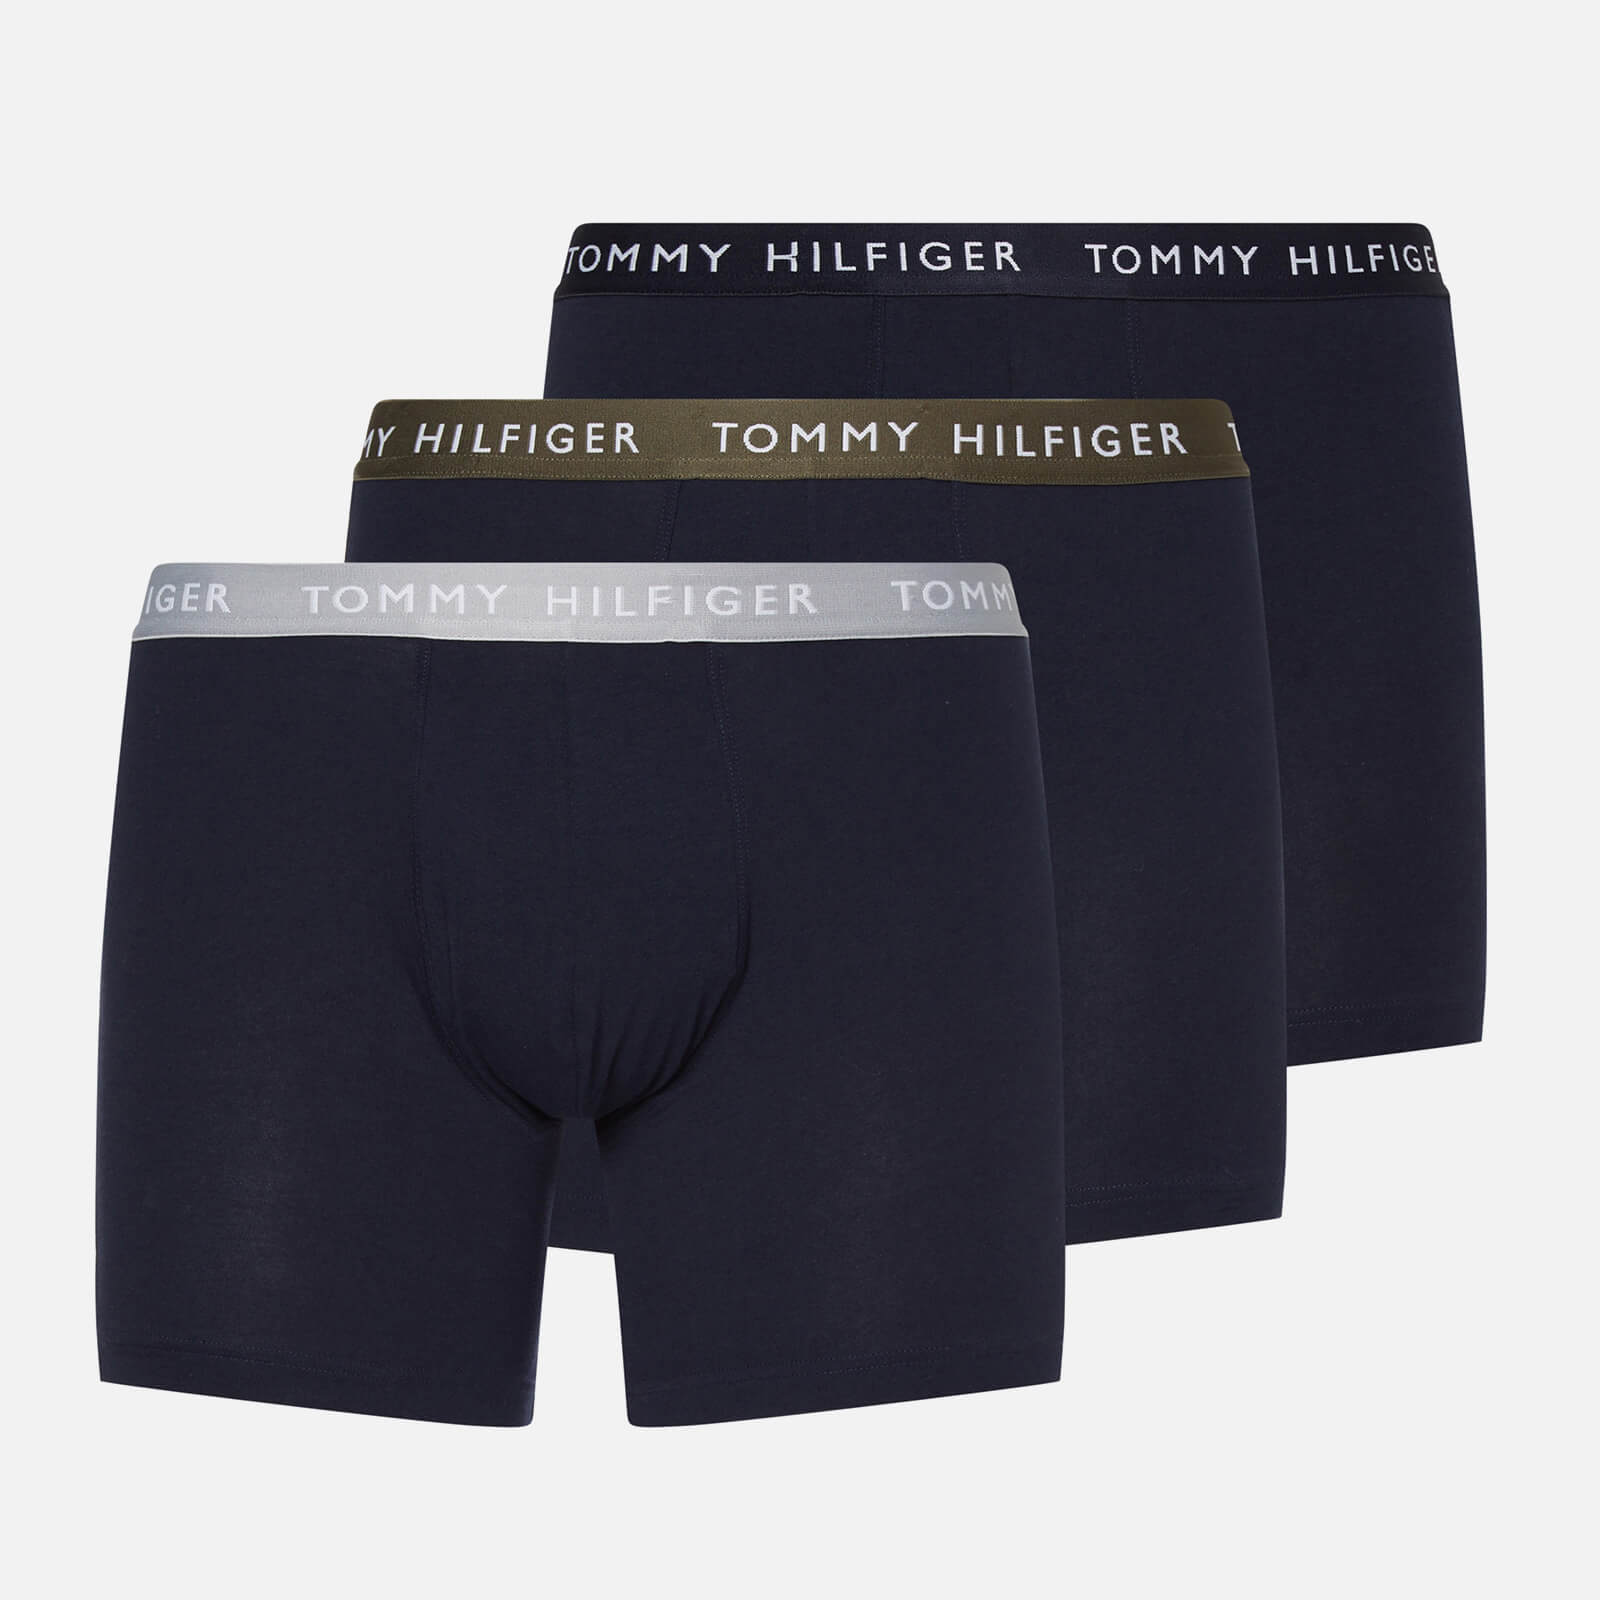 Tommy Hilfiger Men's 3-Pack Contrast Waistband Boxer Briefs - Sublunar/Army Green/Desert Sky - S